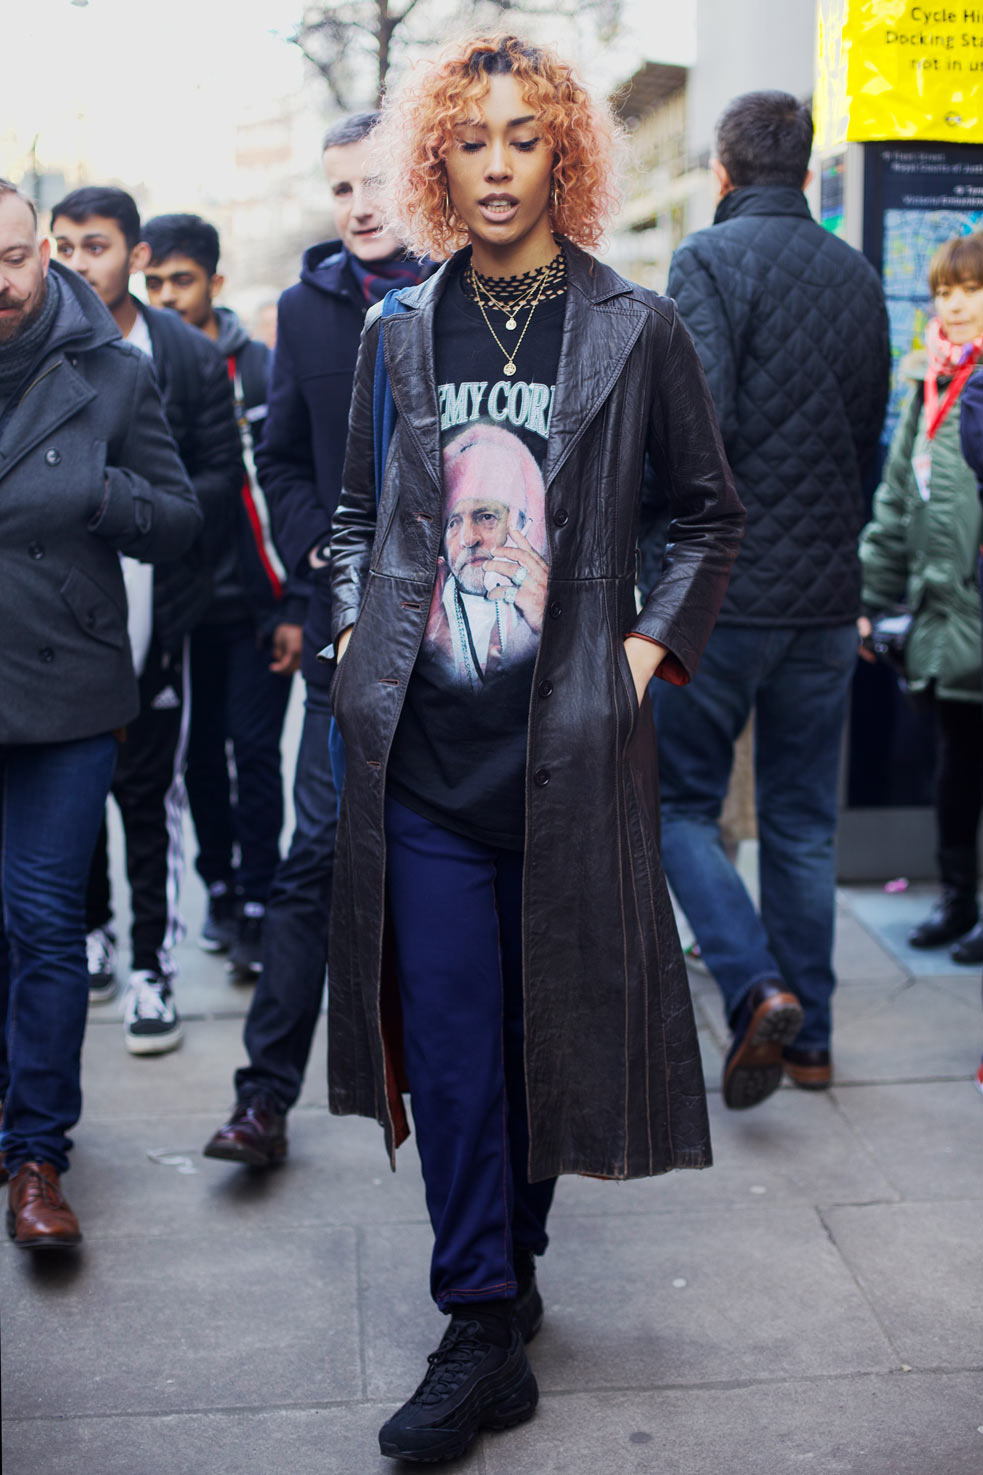 Miista Street Style from London Fashion Week 2018